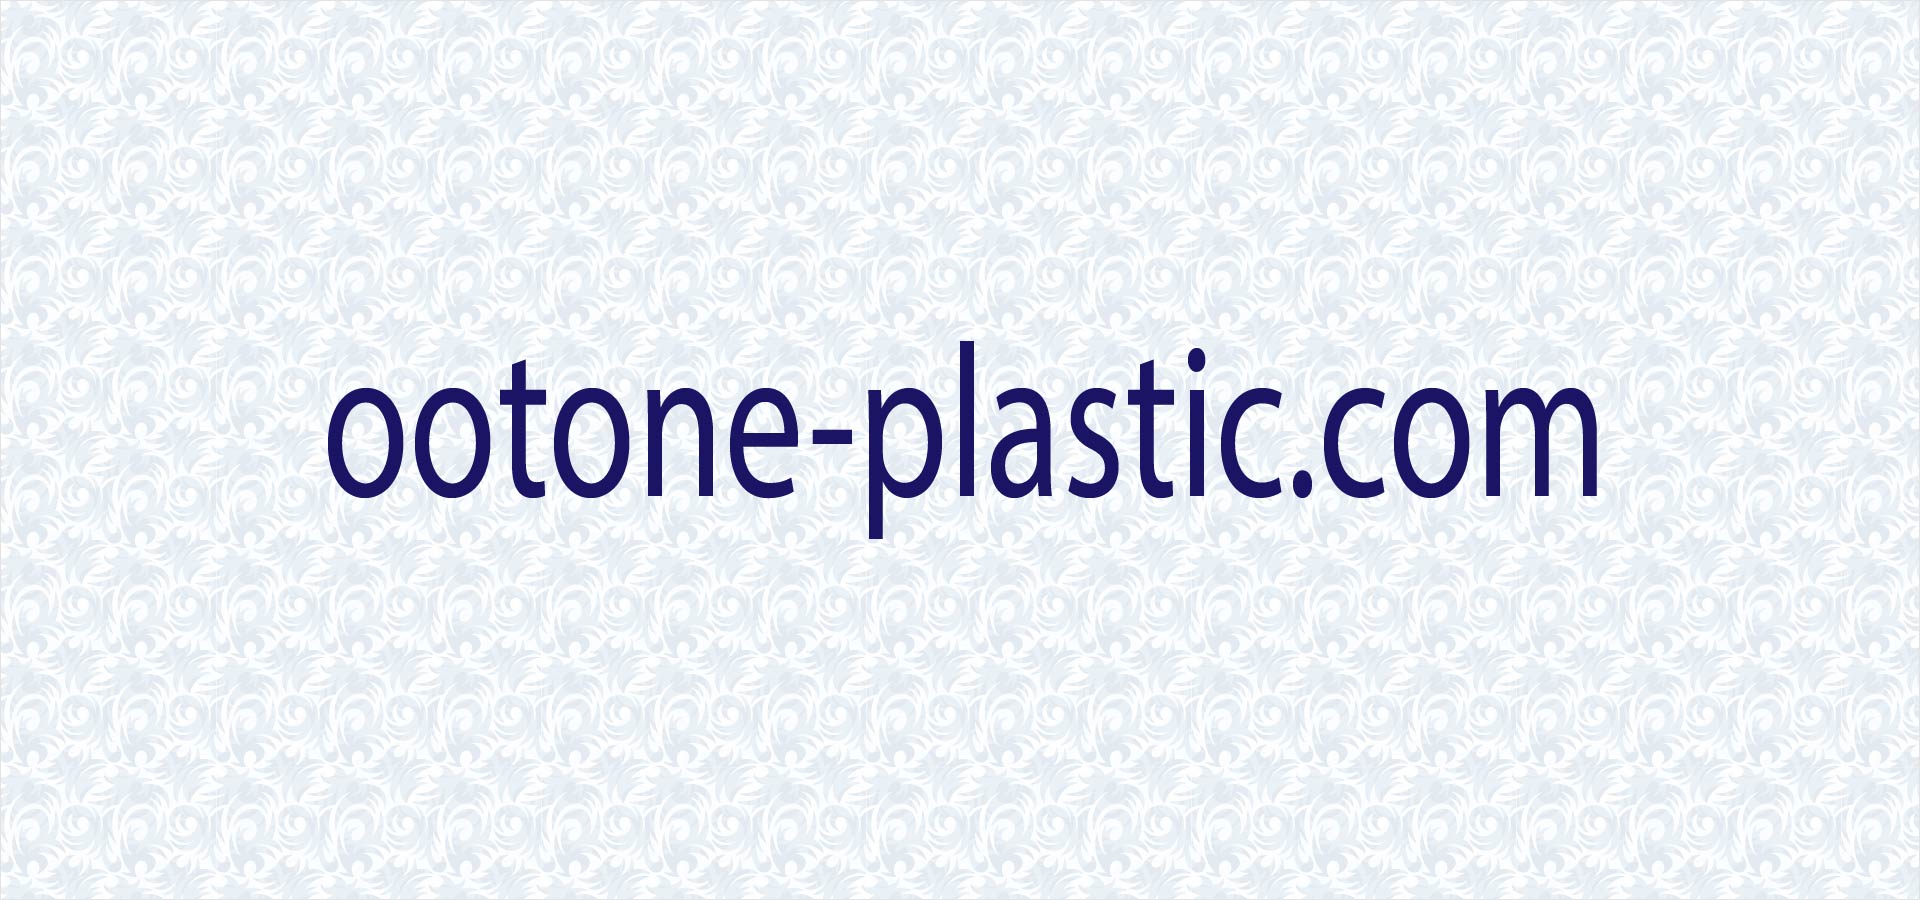 ootone-plastic.com